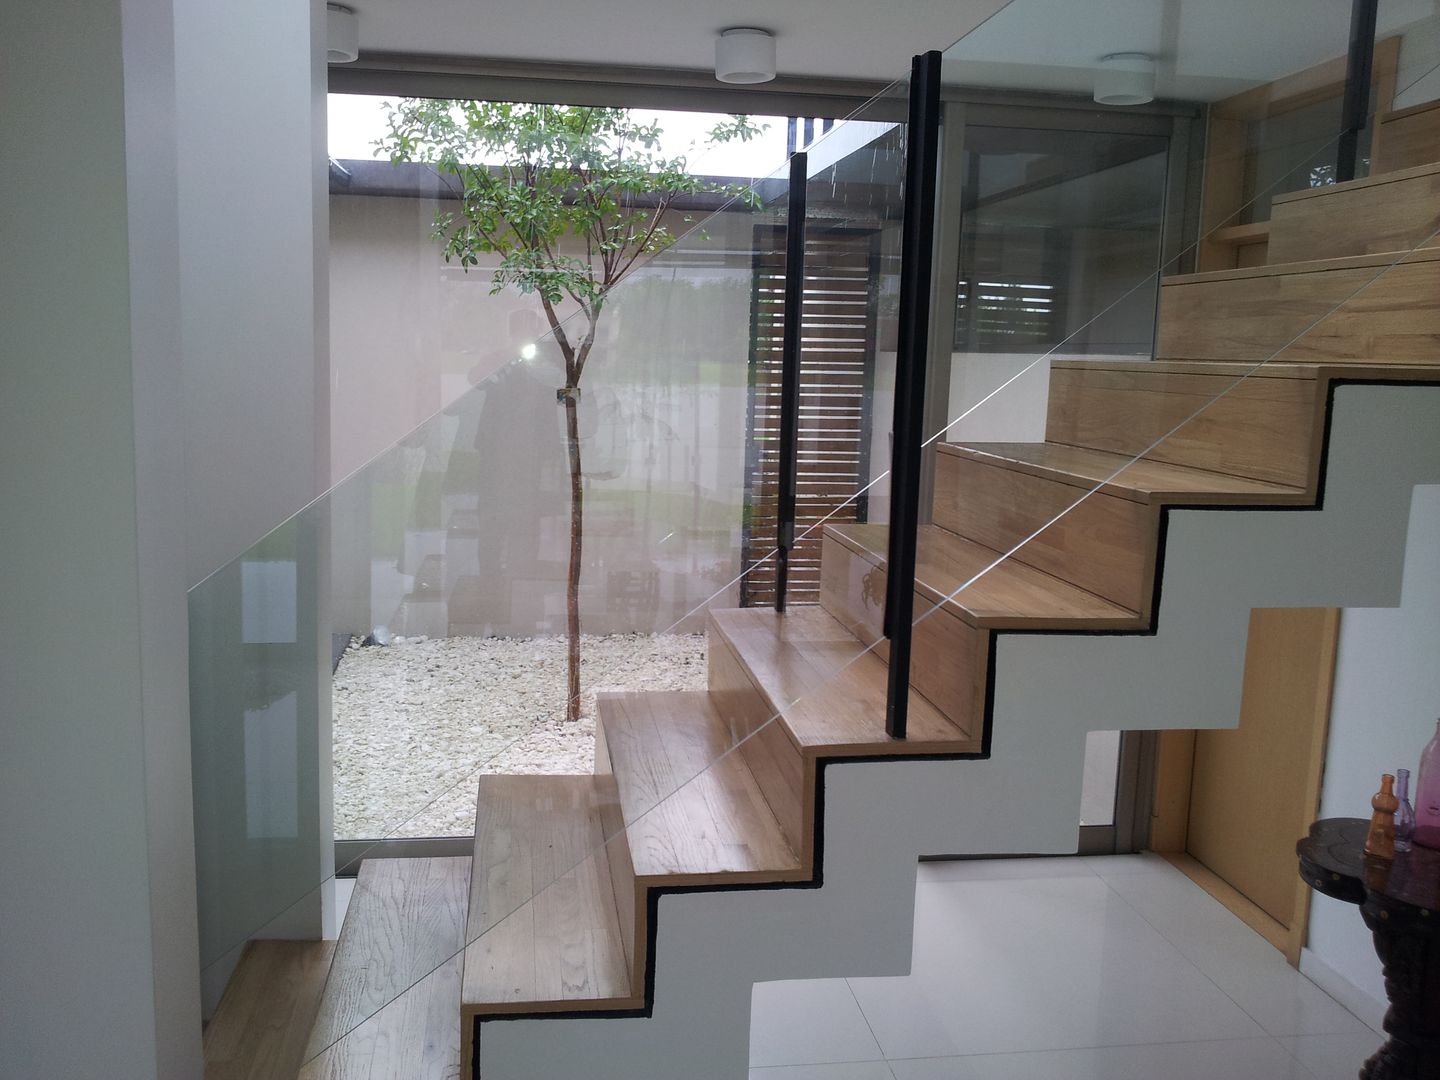 Lagos del Norte, estudio|44 estudio|44 Corredores, halls e escadas modernos